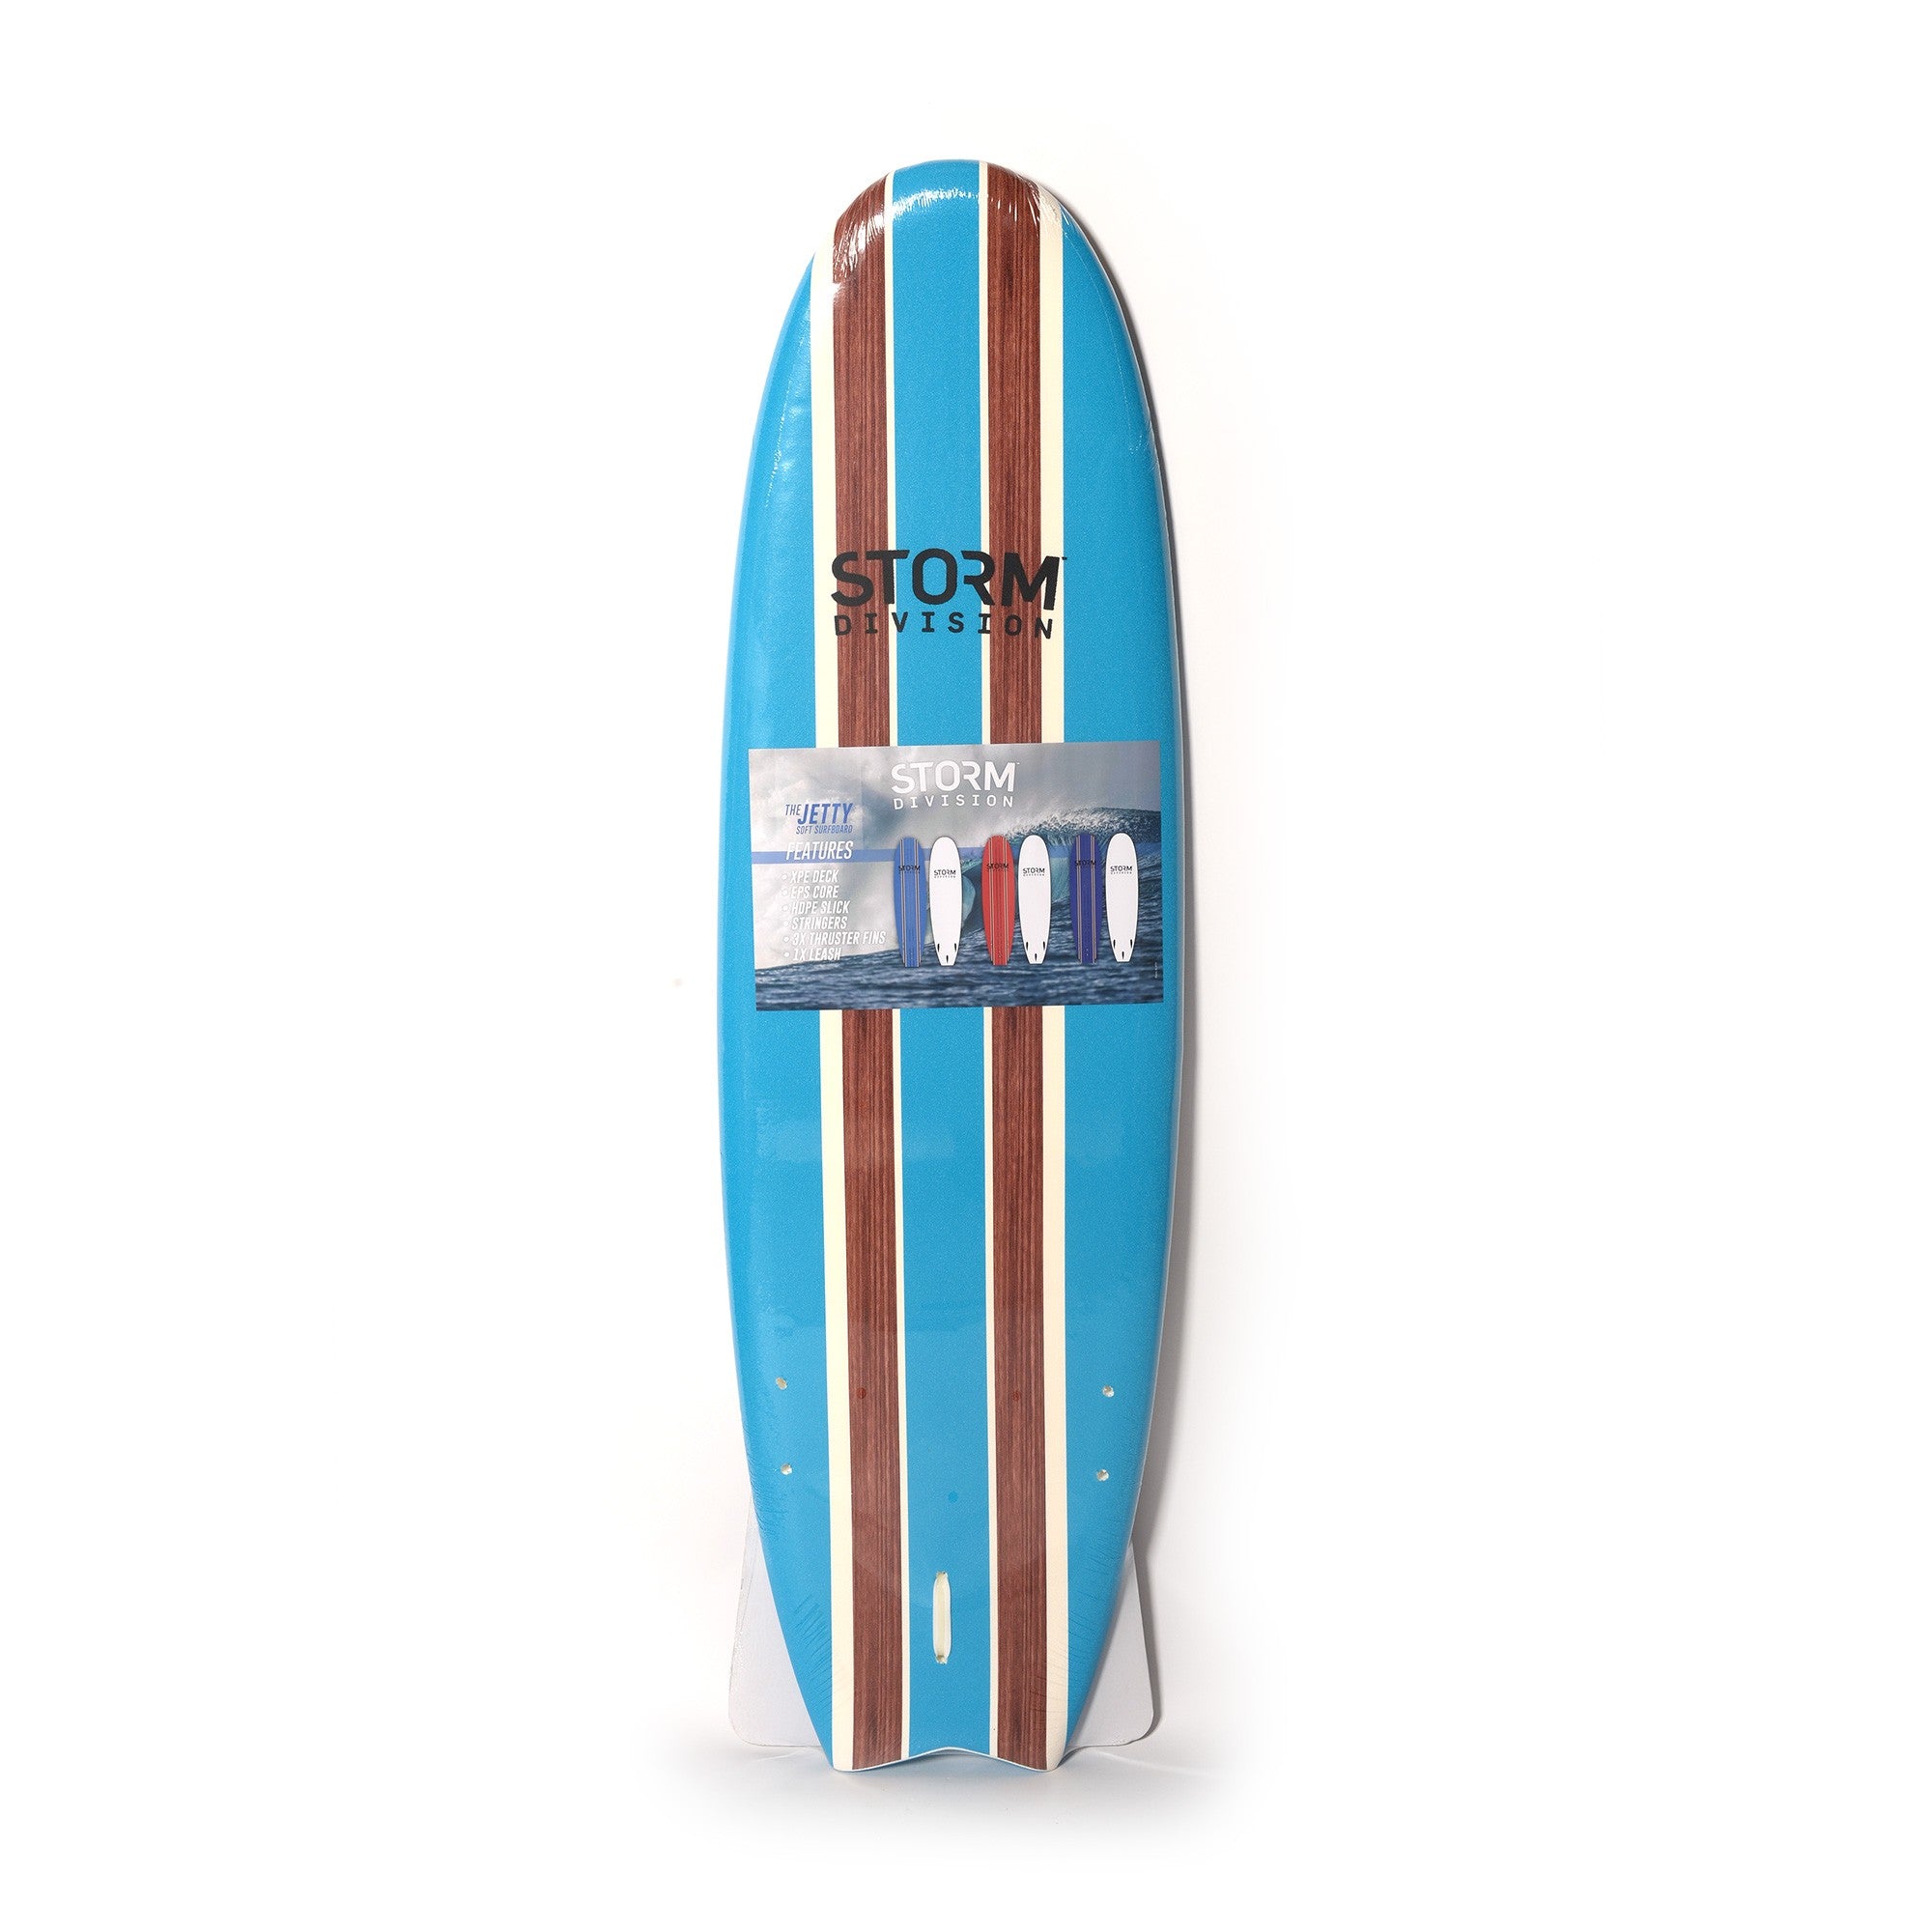 STORM DIVISION - Jetty Softboard - Foam Surfboard - 5'8 - Blue